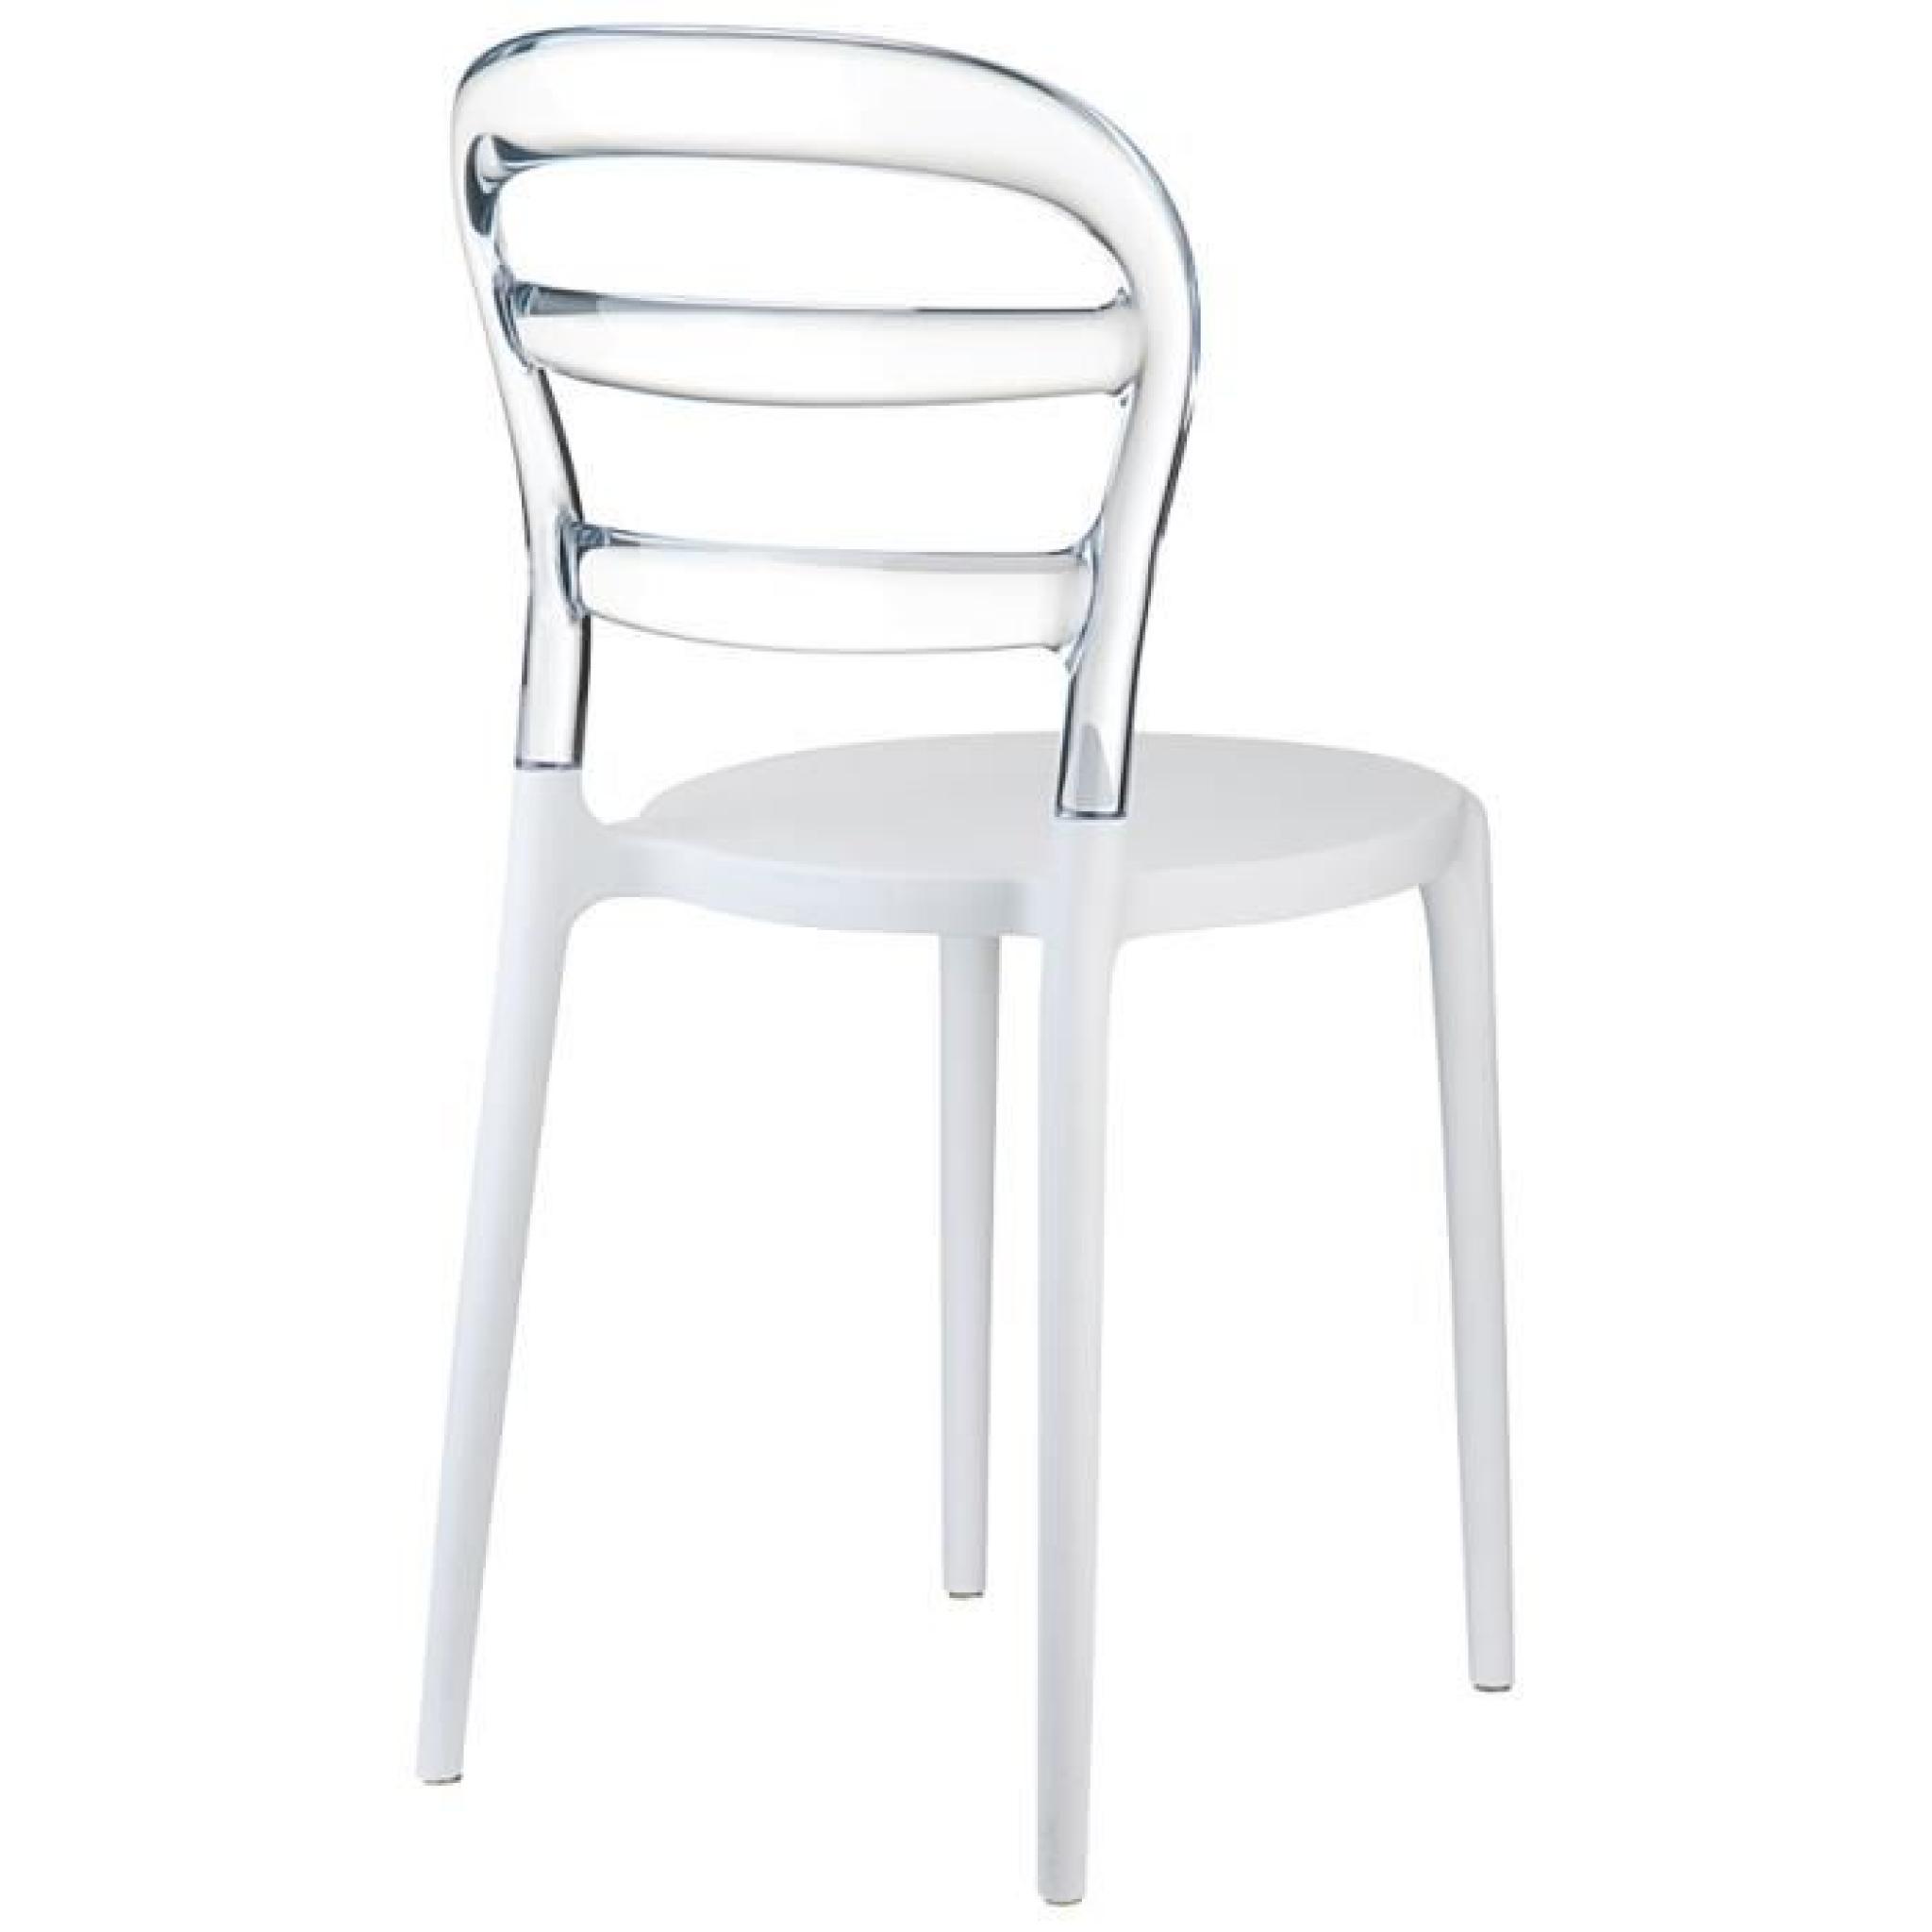 Chaise design 'BARO' blanche et transparente en... pas cher